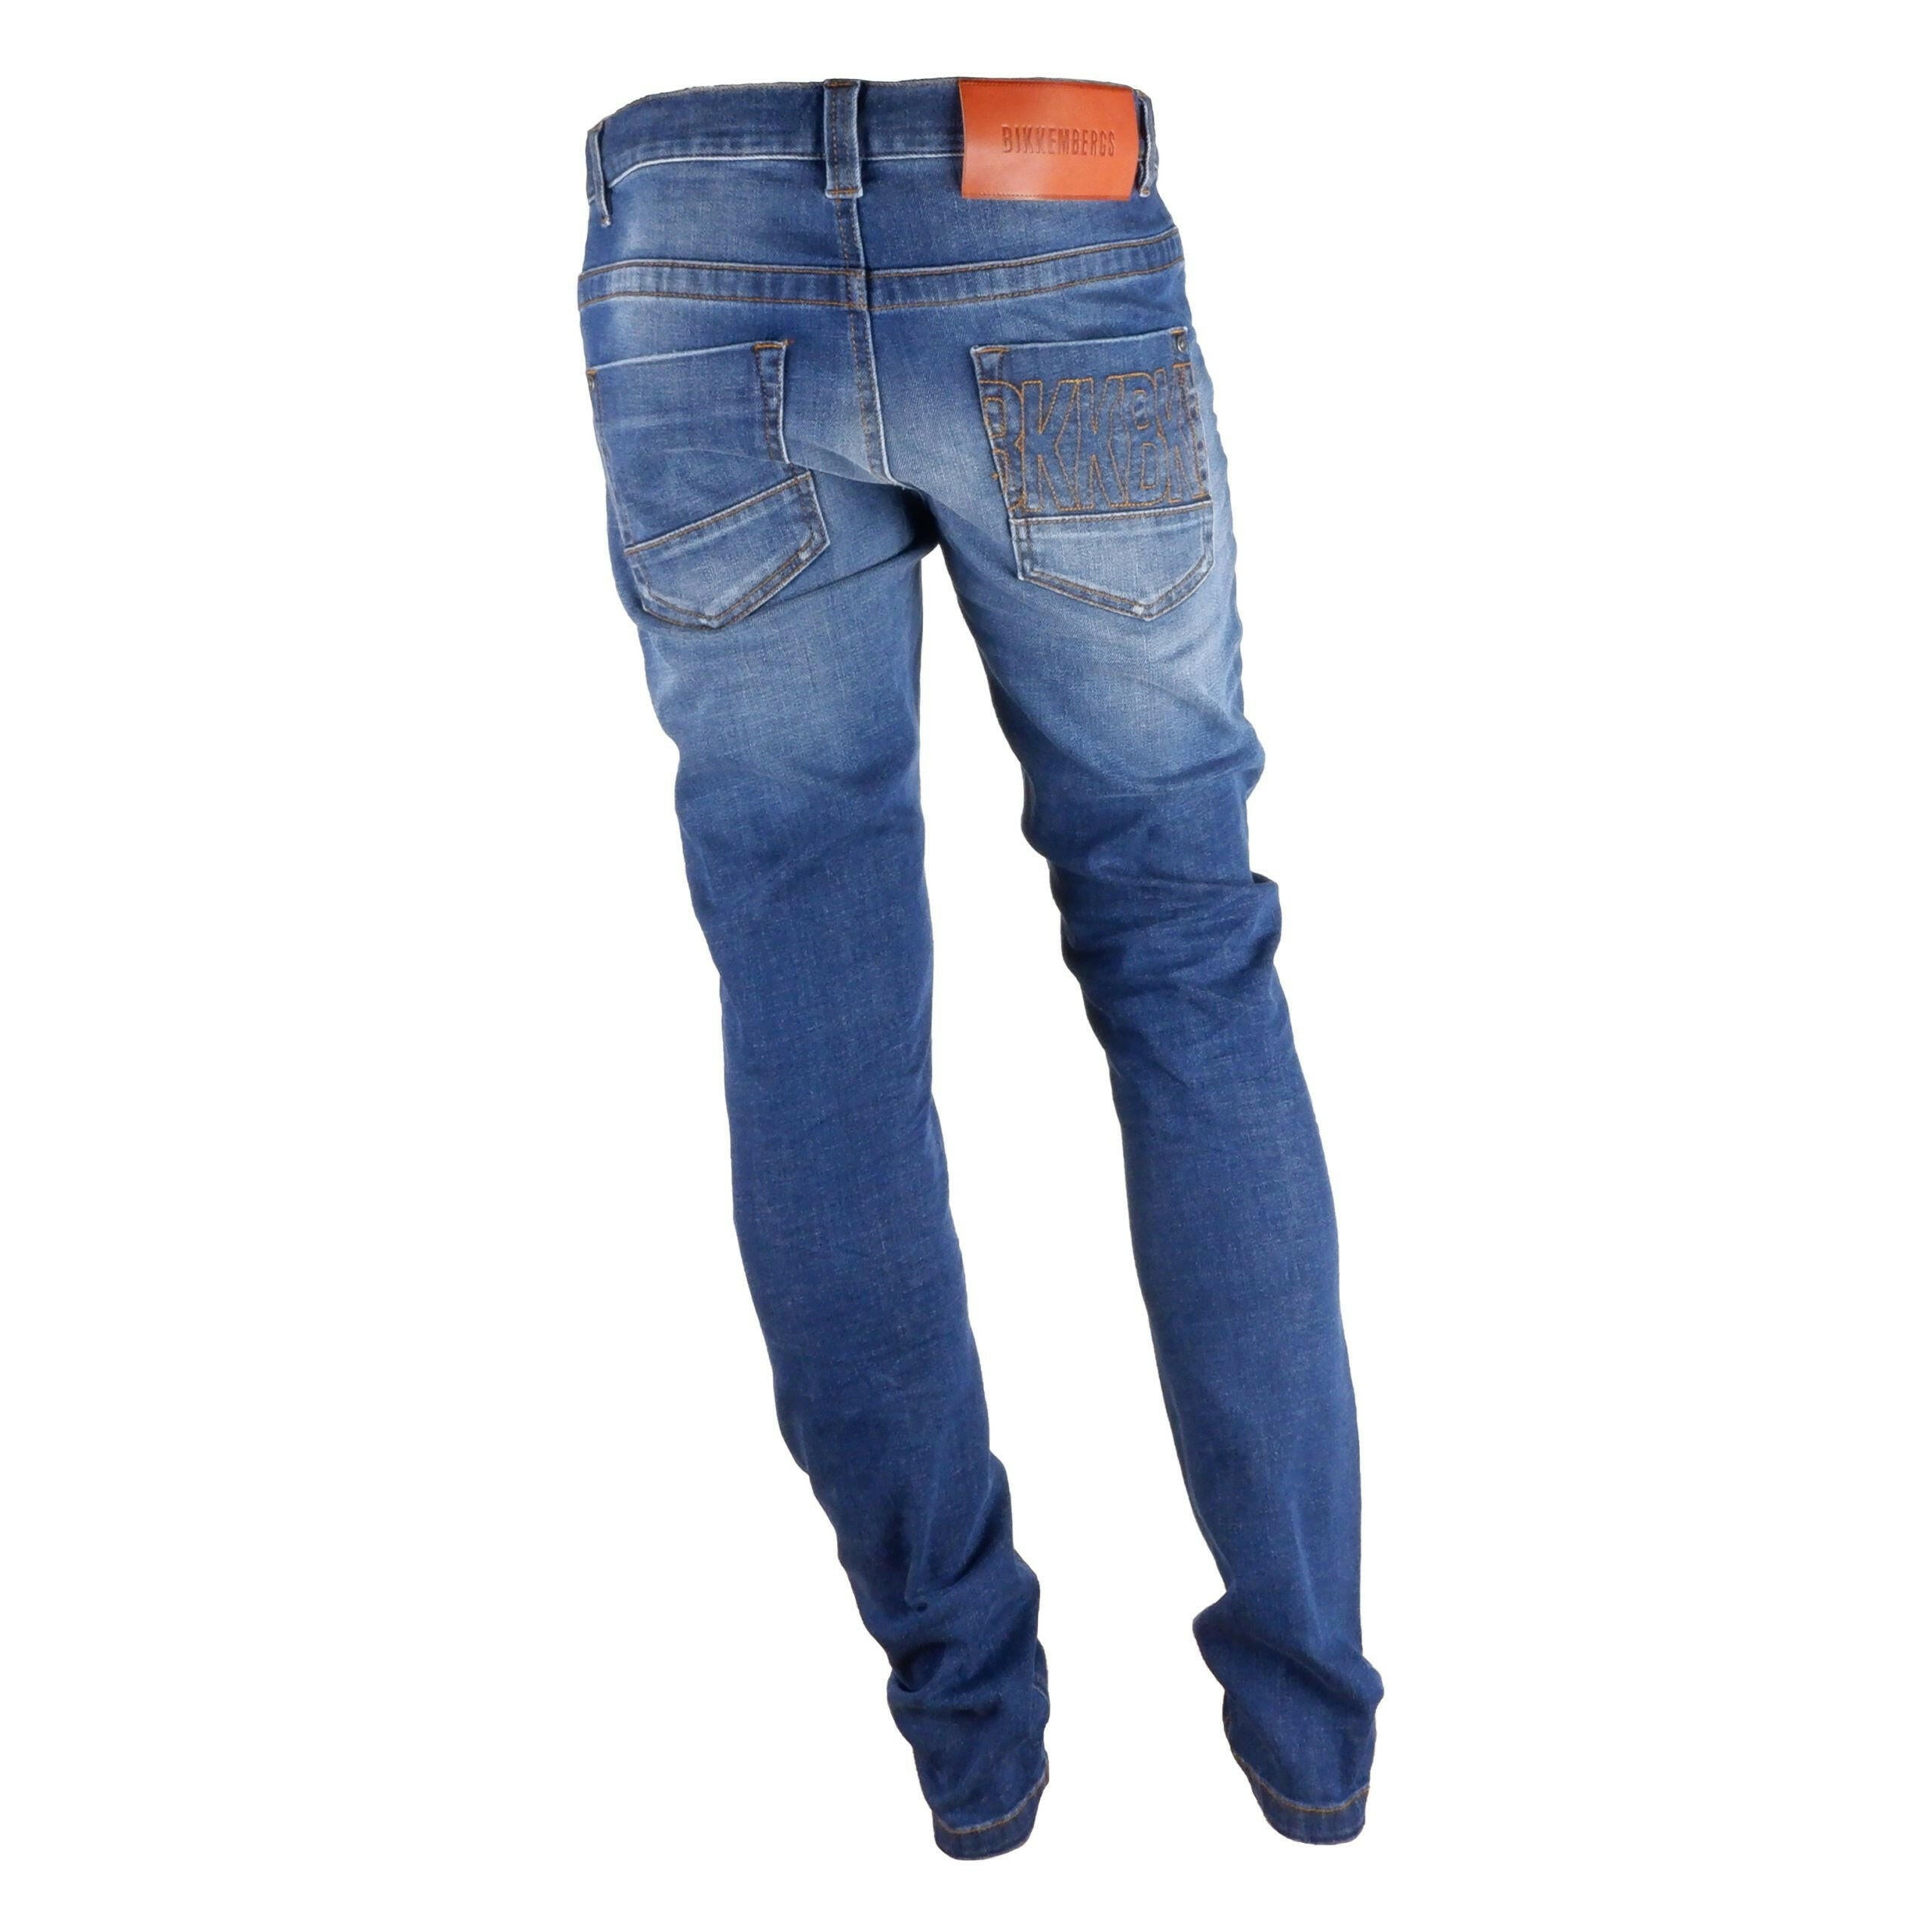 Bikkembergs Blue Cotton Jeans & Pant - GENUINE AUTHENTIC BRAND LLC  